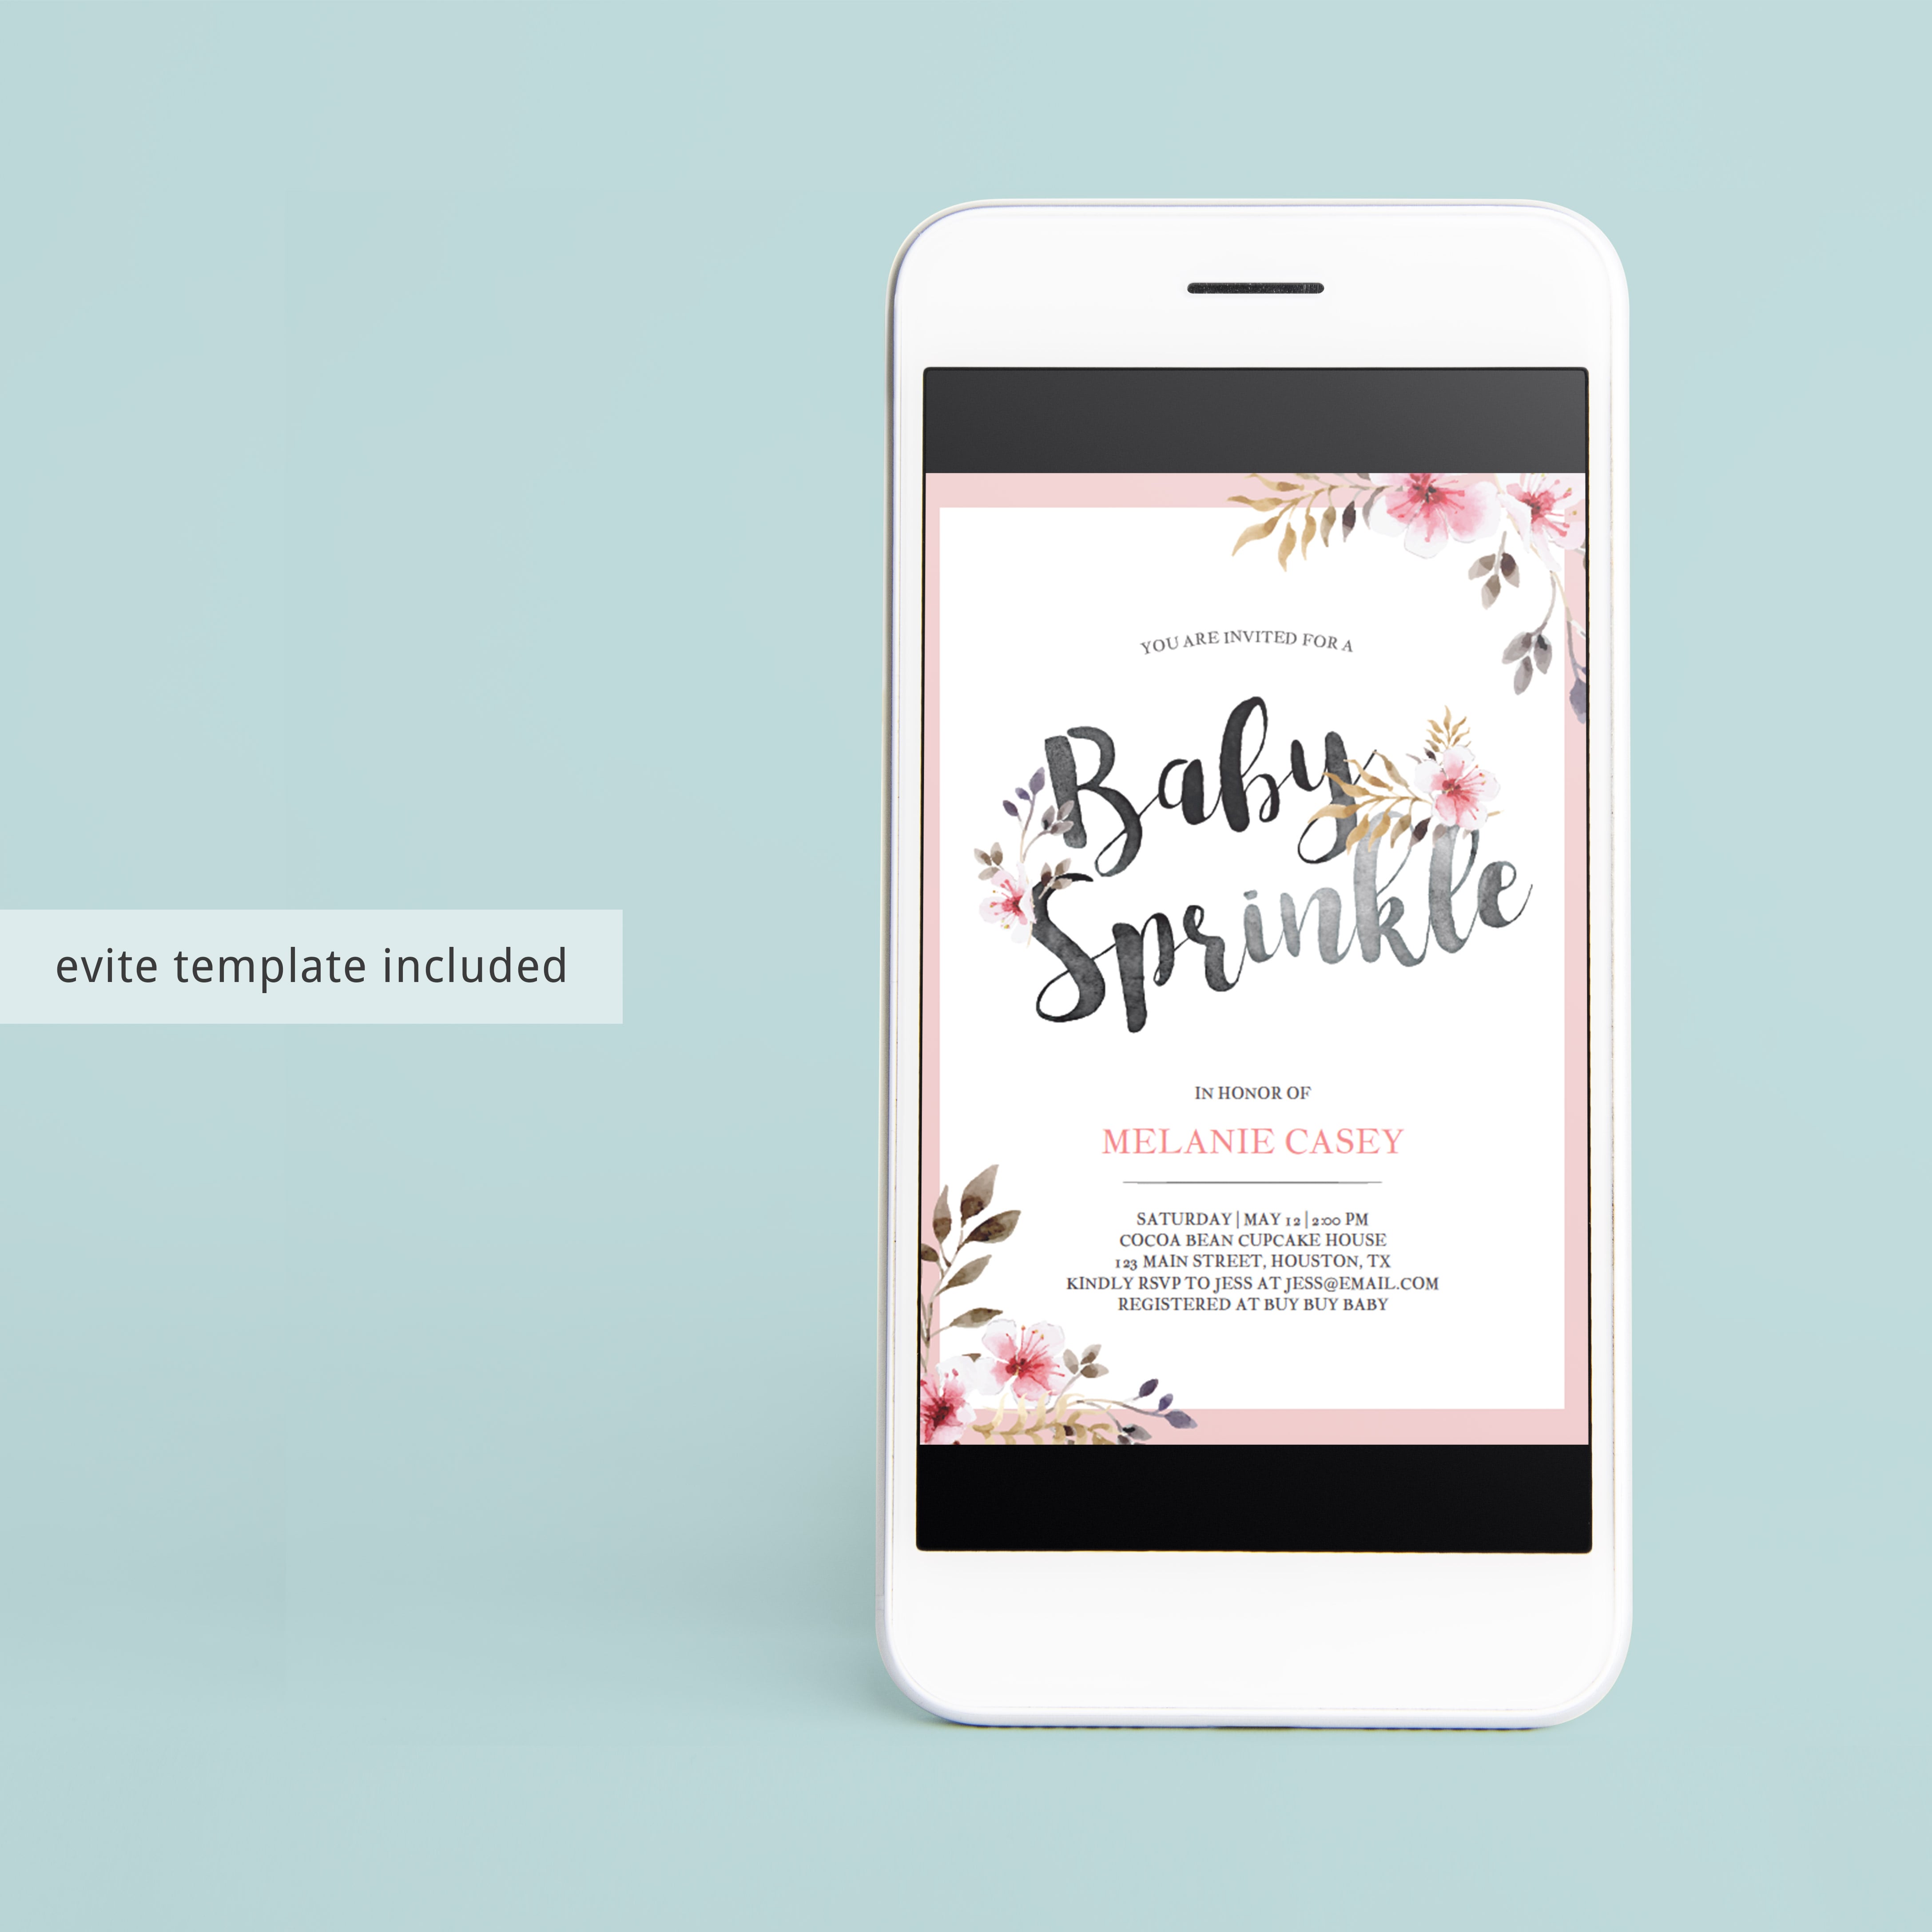 Editable baby sprinkle invitation for girl by LittleSizzle